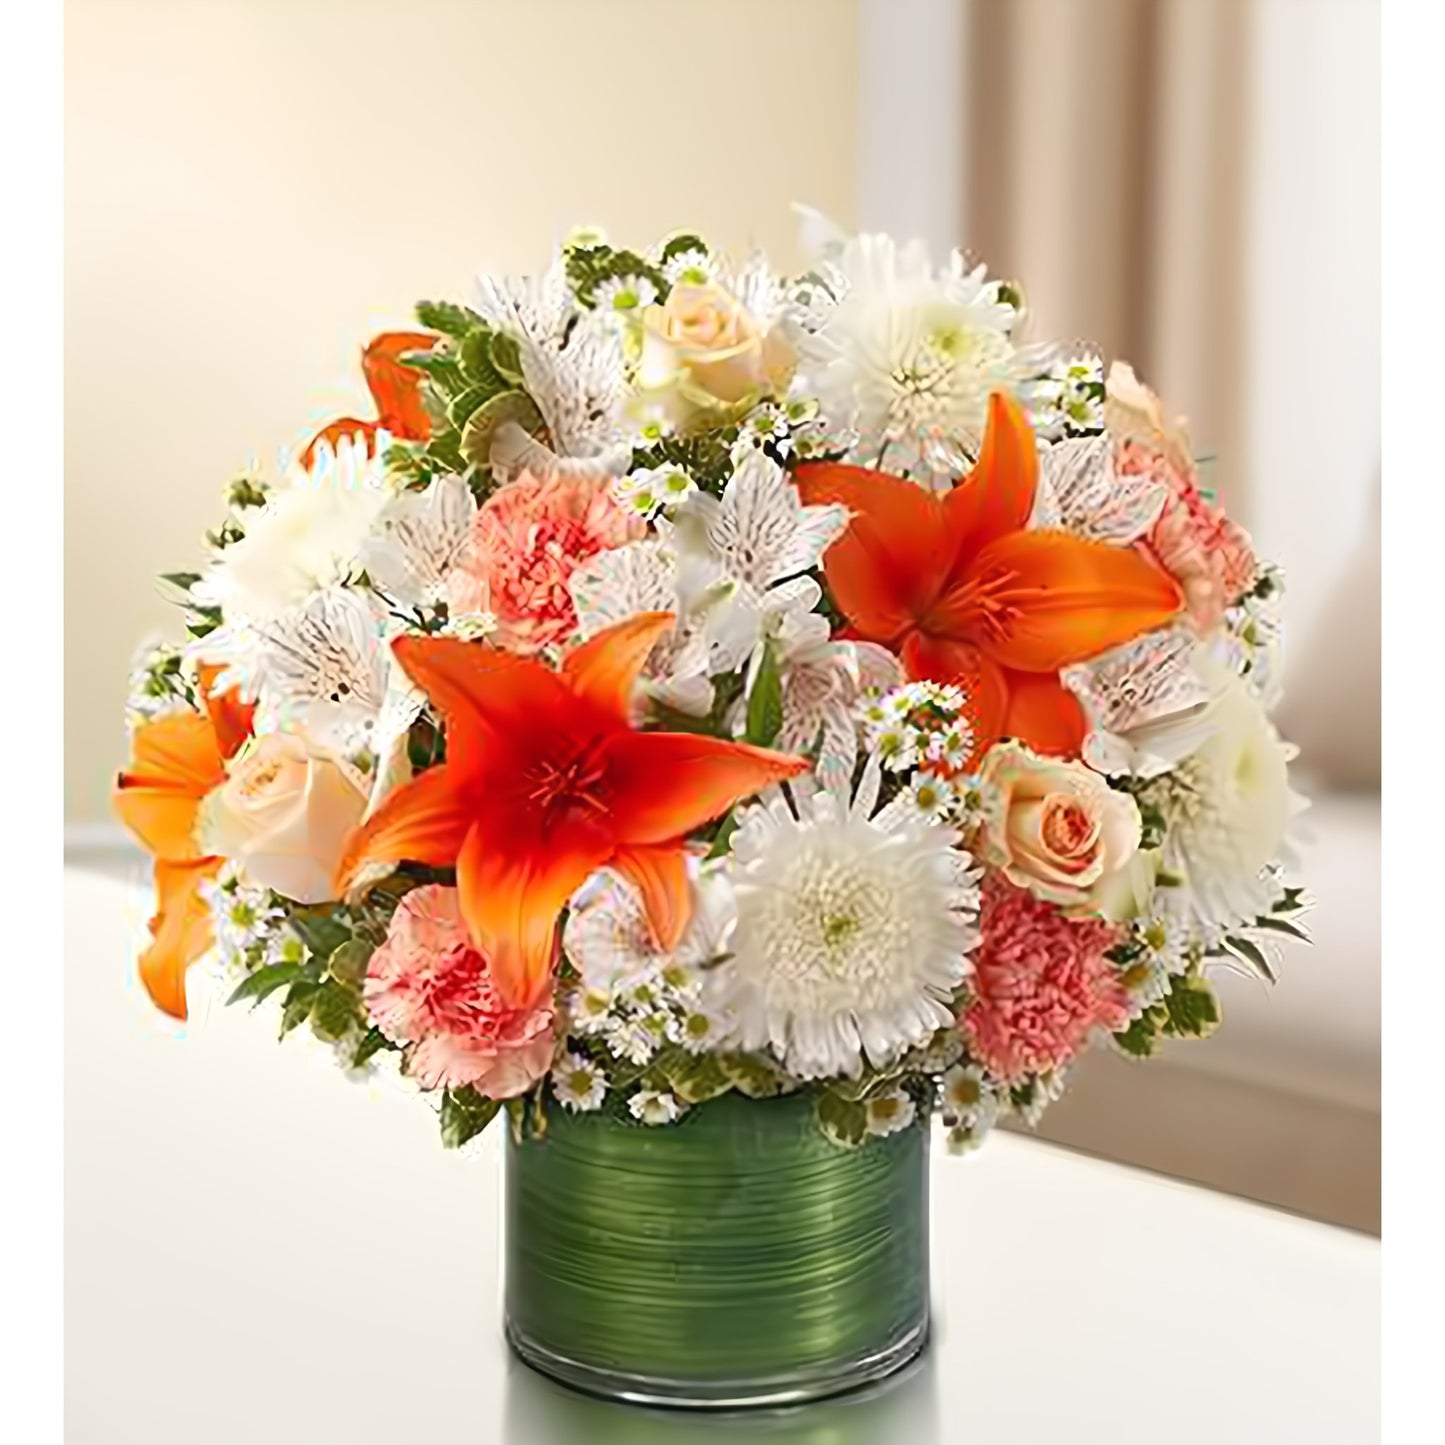 Cherished Memories - Peach, Orange and White - Funeral > Vase Arrangements - Queens Flower Delivery